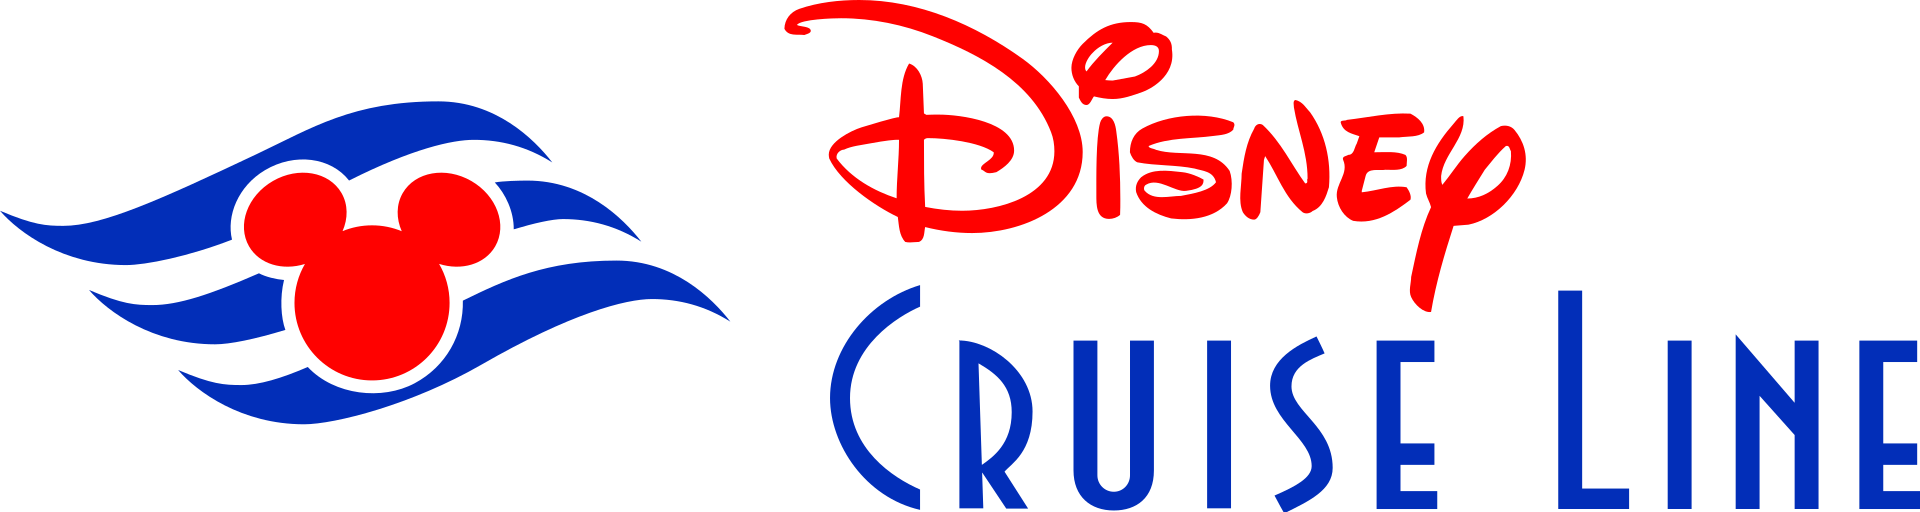 Disney Fantasy - Wikipedia